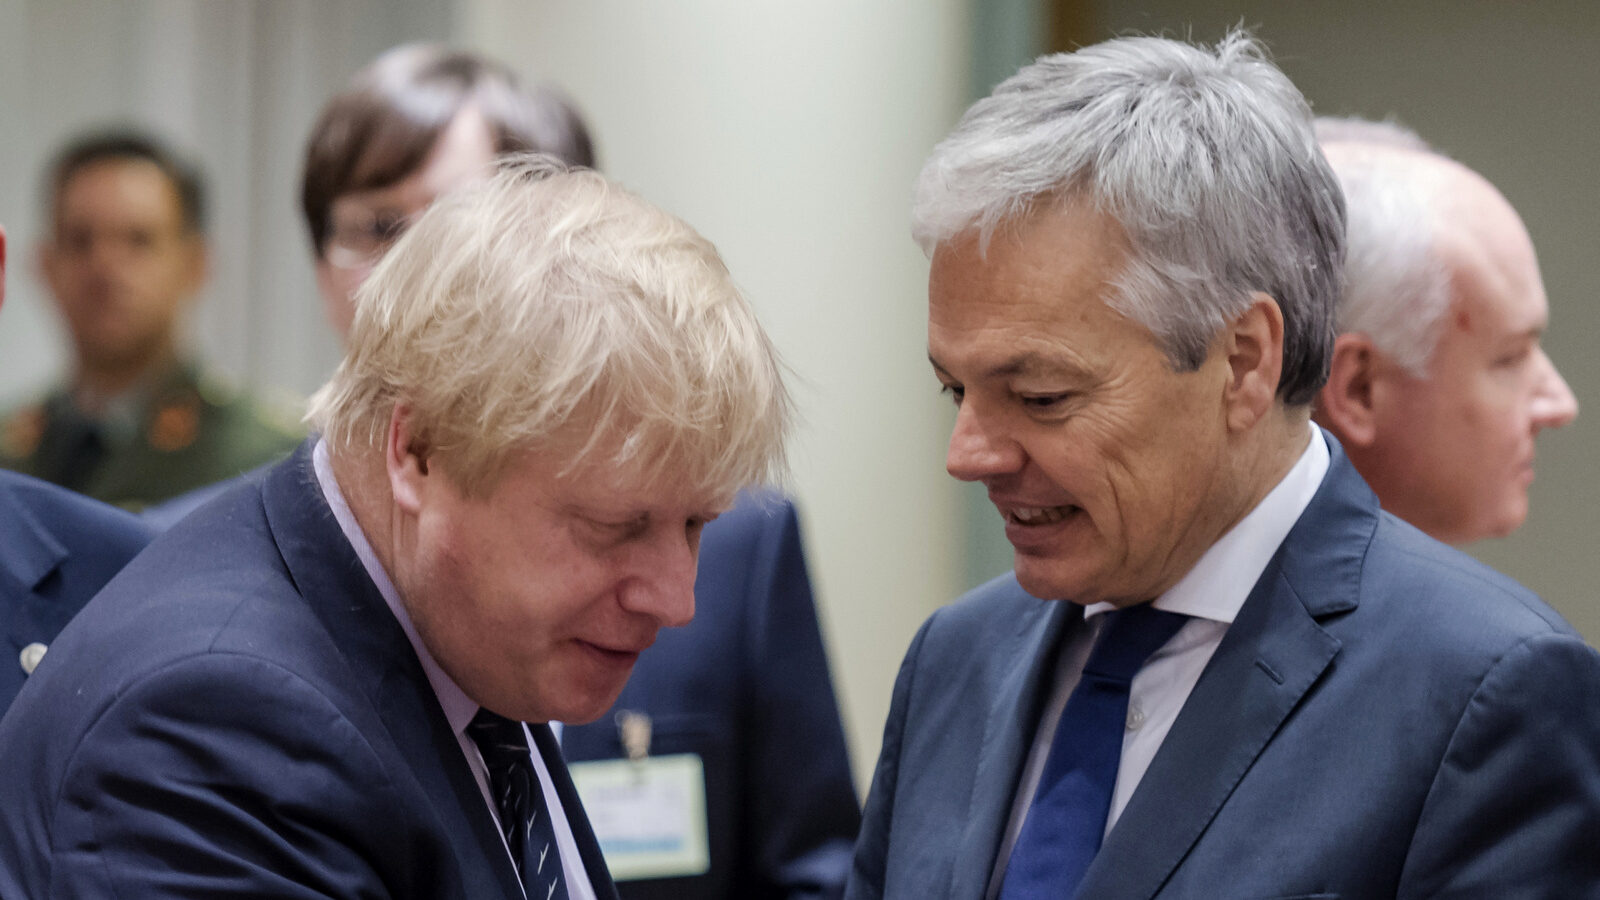 Britain's Foreign Secretary Boris Johnson, center, greets Belgium's Foreign Minister Didier Reynder. (AP/Geert Vanden Wijngaert)